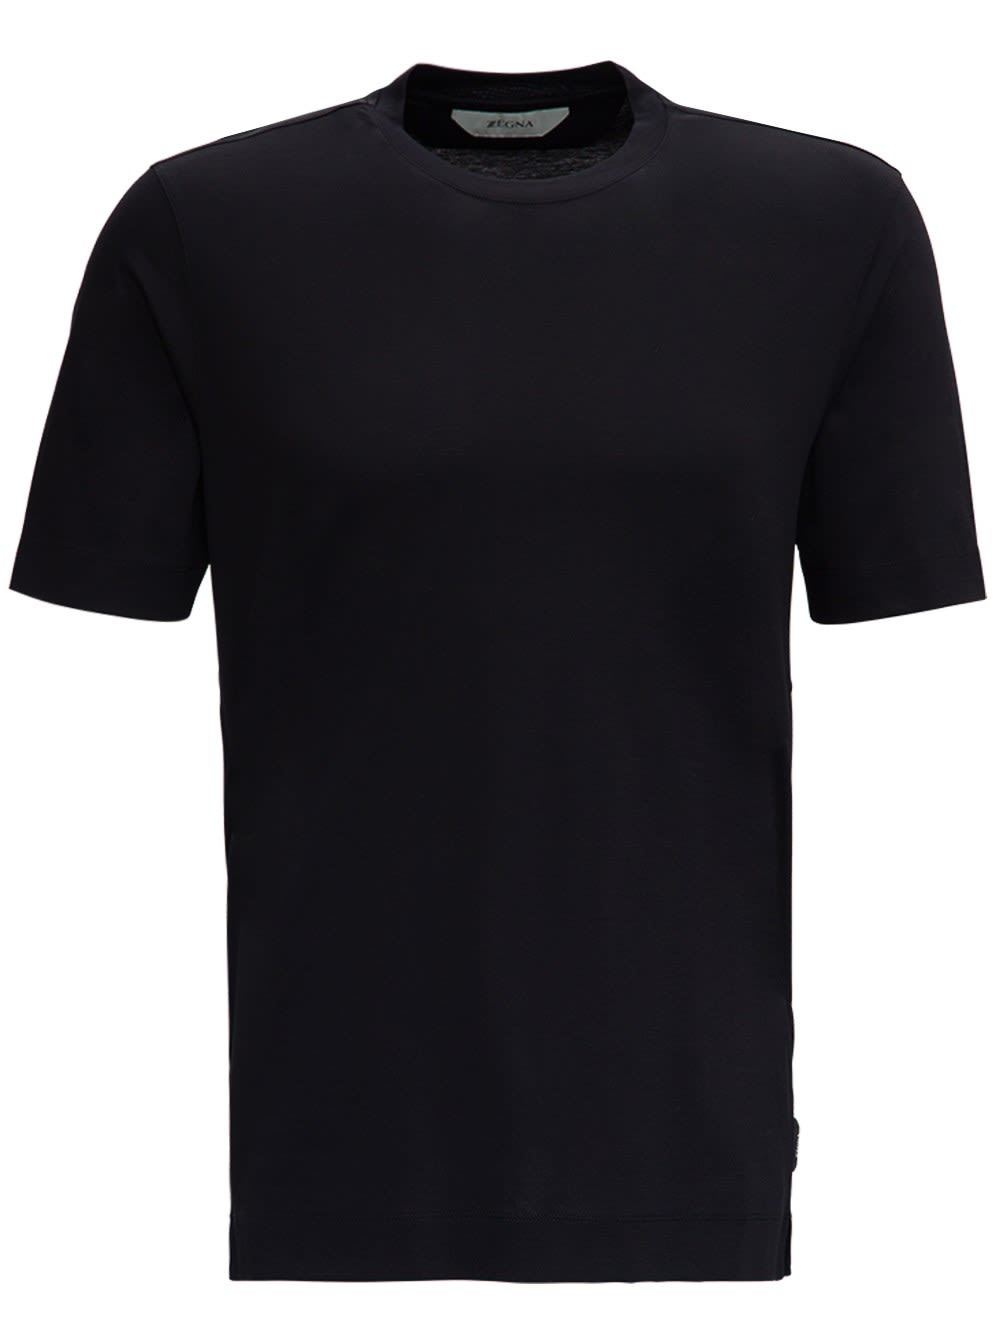 Z Zegna Black Jersey T-shirt